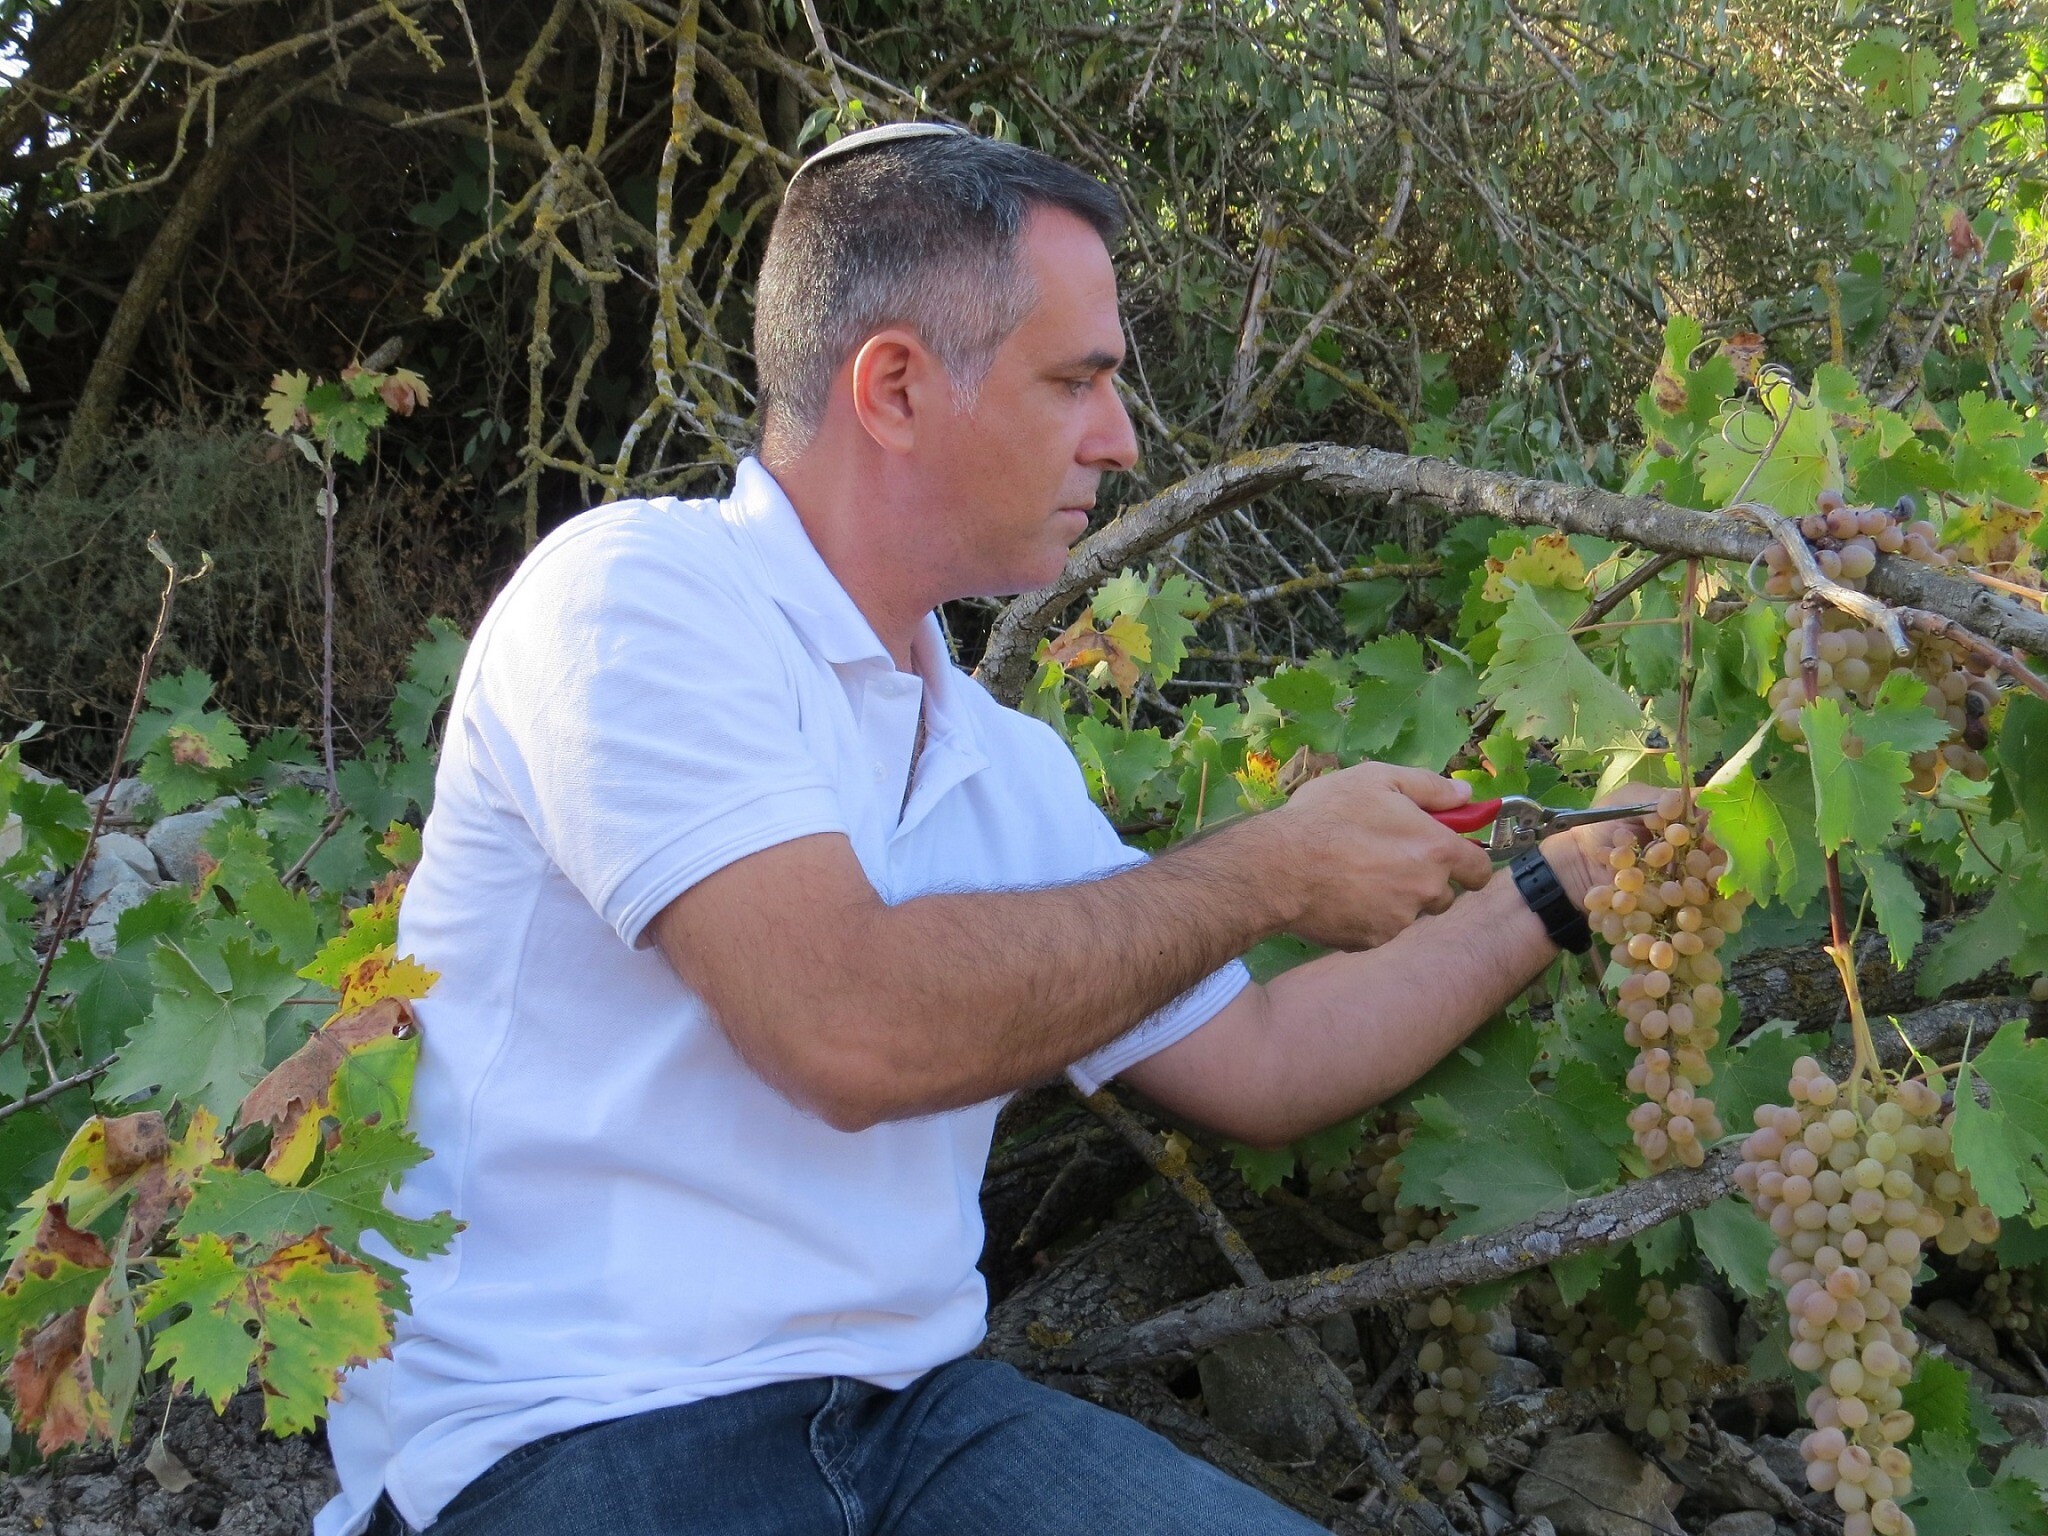 Dr. Elyashiv Drori harvests grapes at a research vineyard near Ariel University in 2020. (courtesy Ariel University)